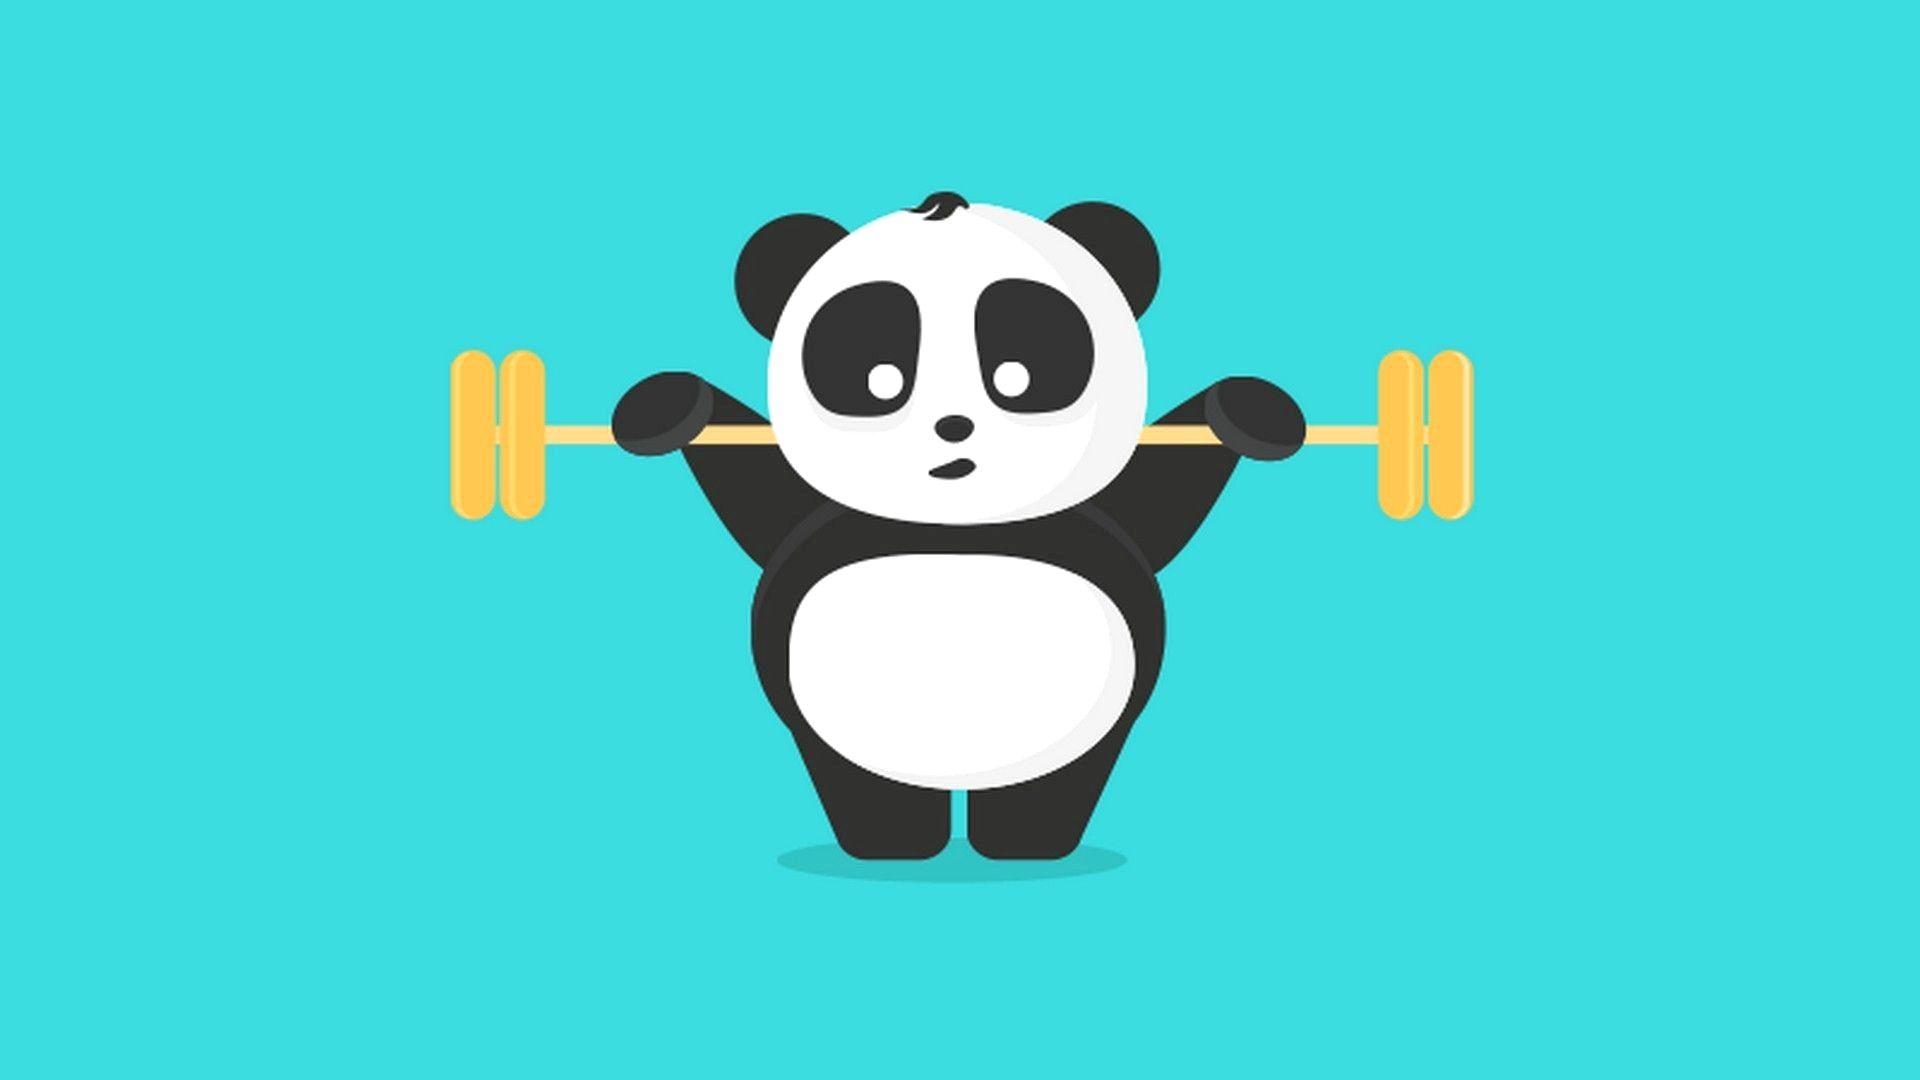 Animated Panda Wallpapers - Top Free Animated Panda Backgrounds